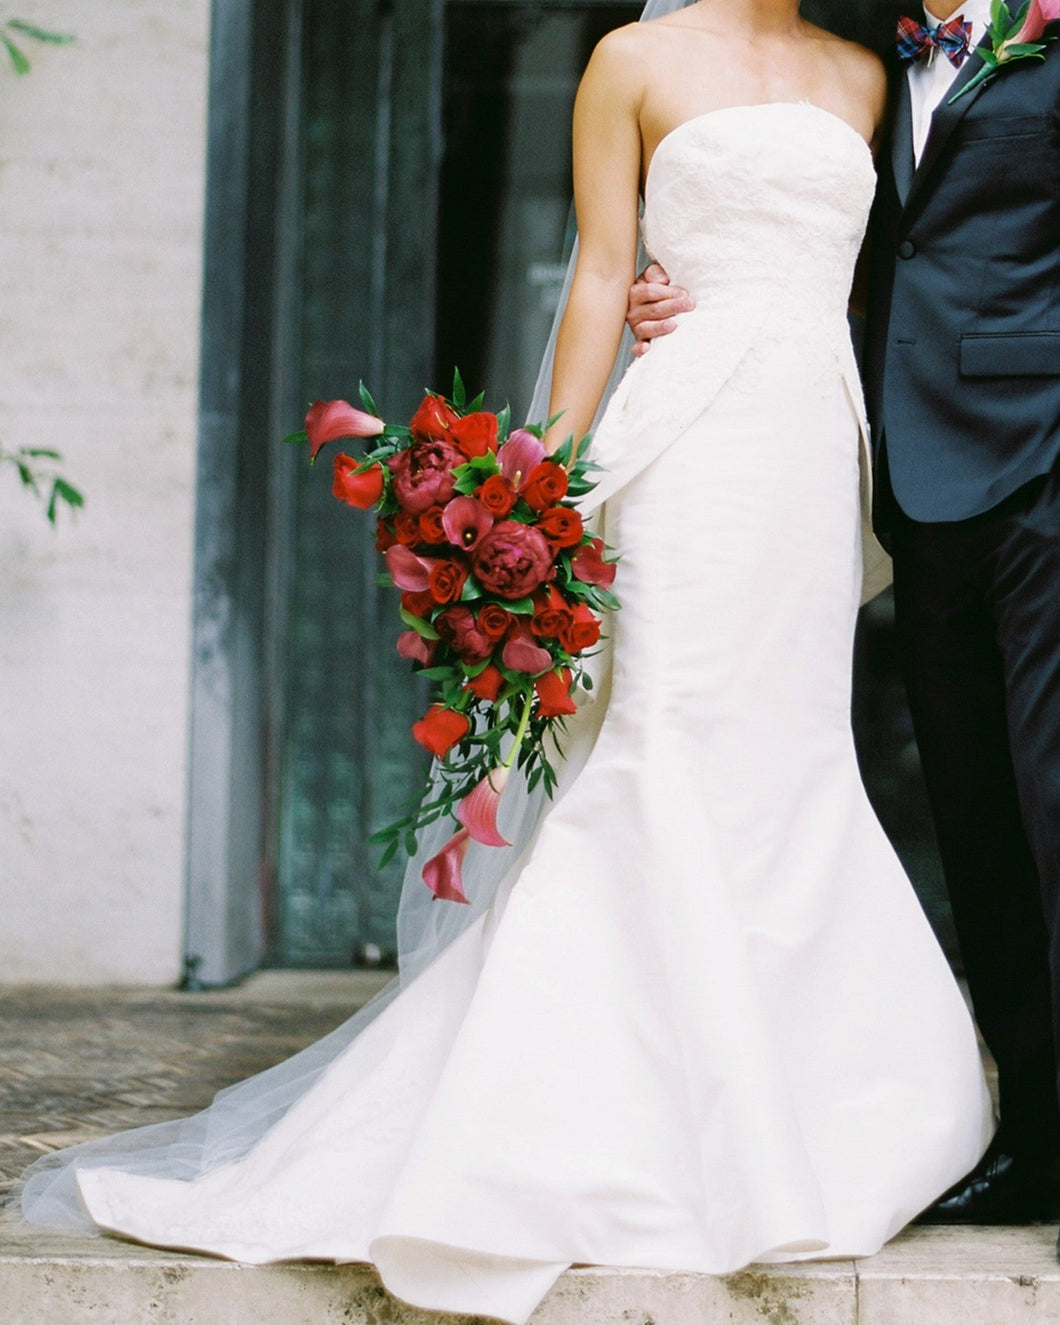 Oscar de la Renta 'Fall 2014 Bridal' wedding dress size-02 PREOWNED